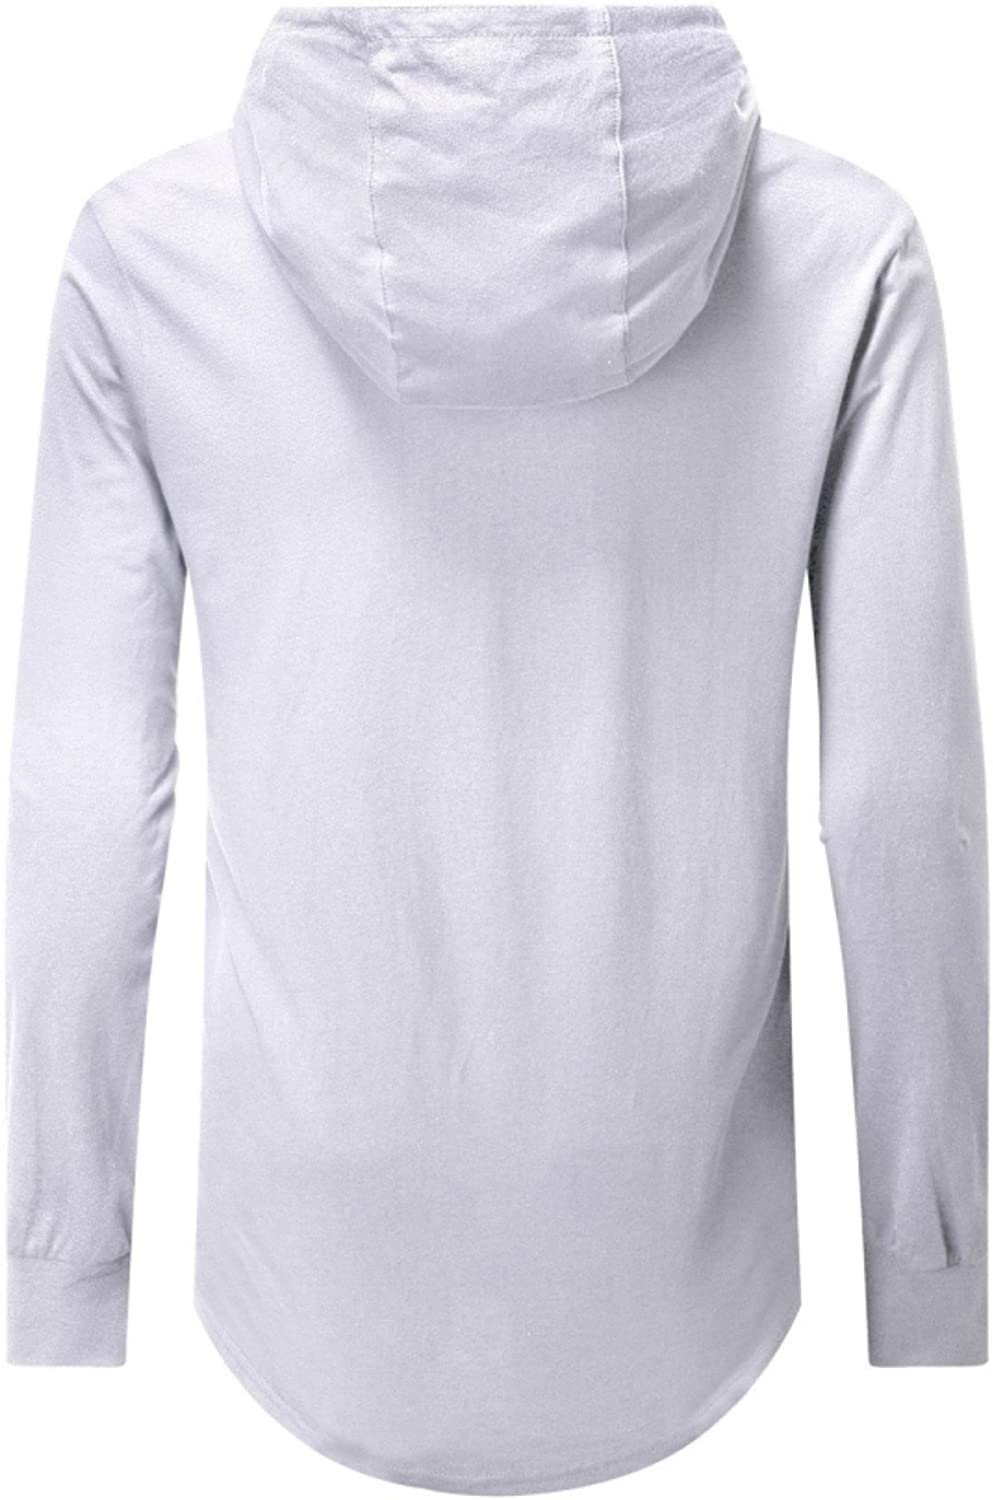 Aiyino Men's S-5X Short/Long Sleeve Fashion Athletic Hoodies Sport Sweatshirt  Pullover